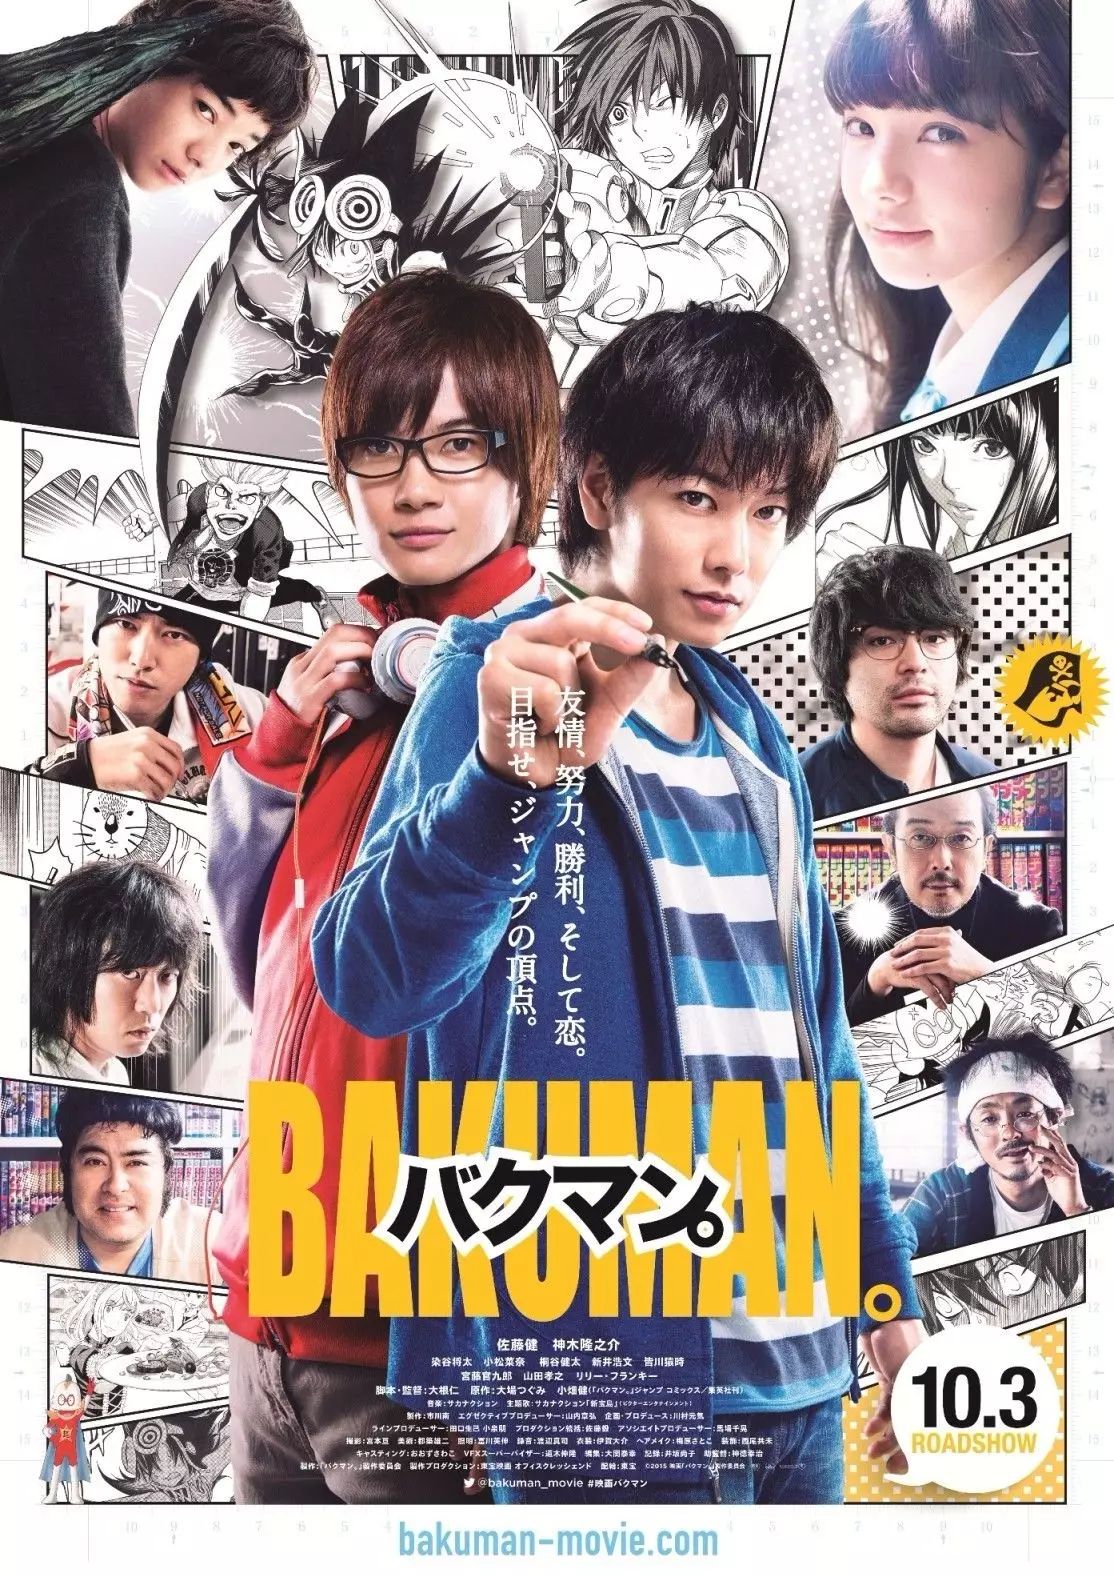 Bakuman Main Poster